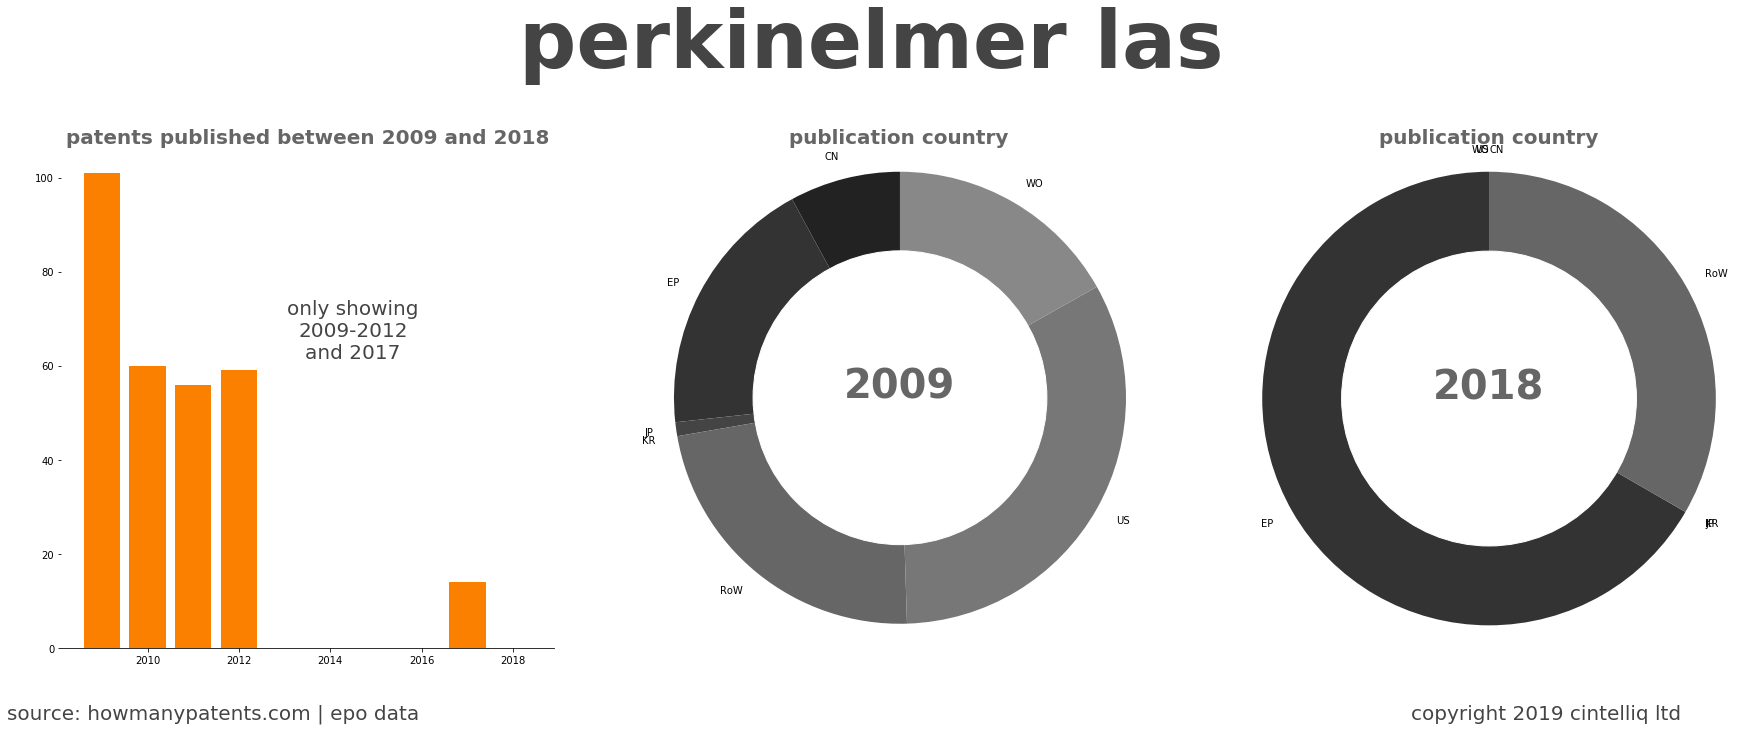 summary of patents for Perkinelmer Las